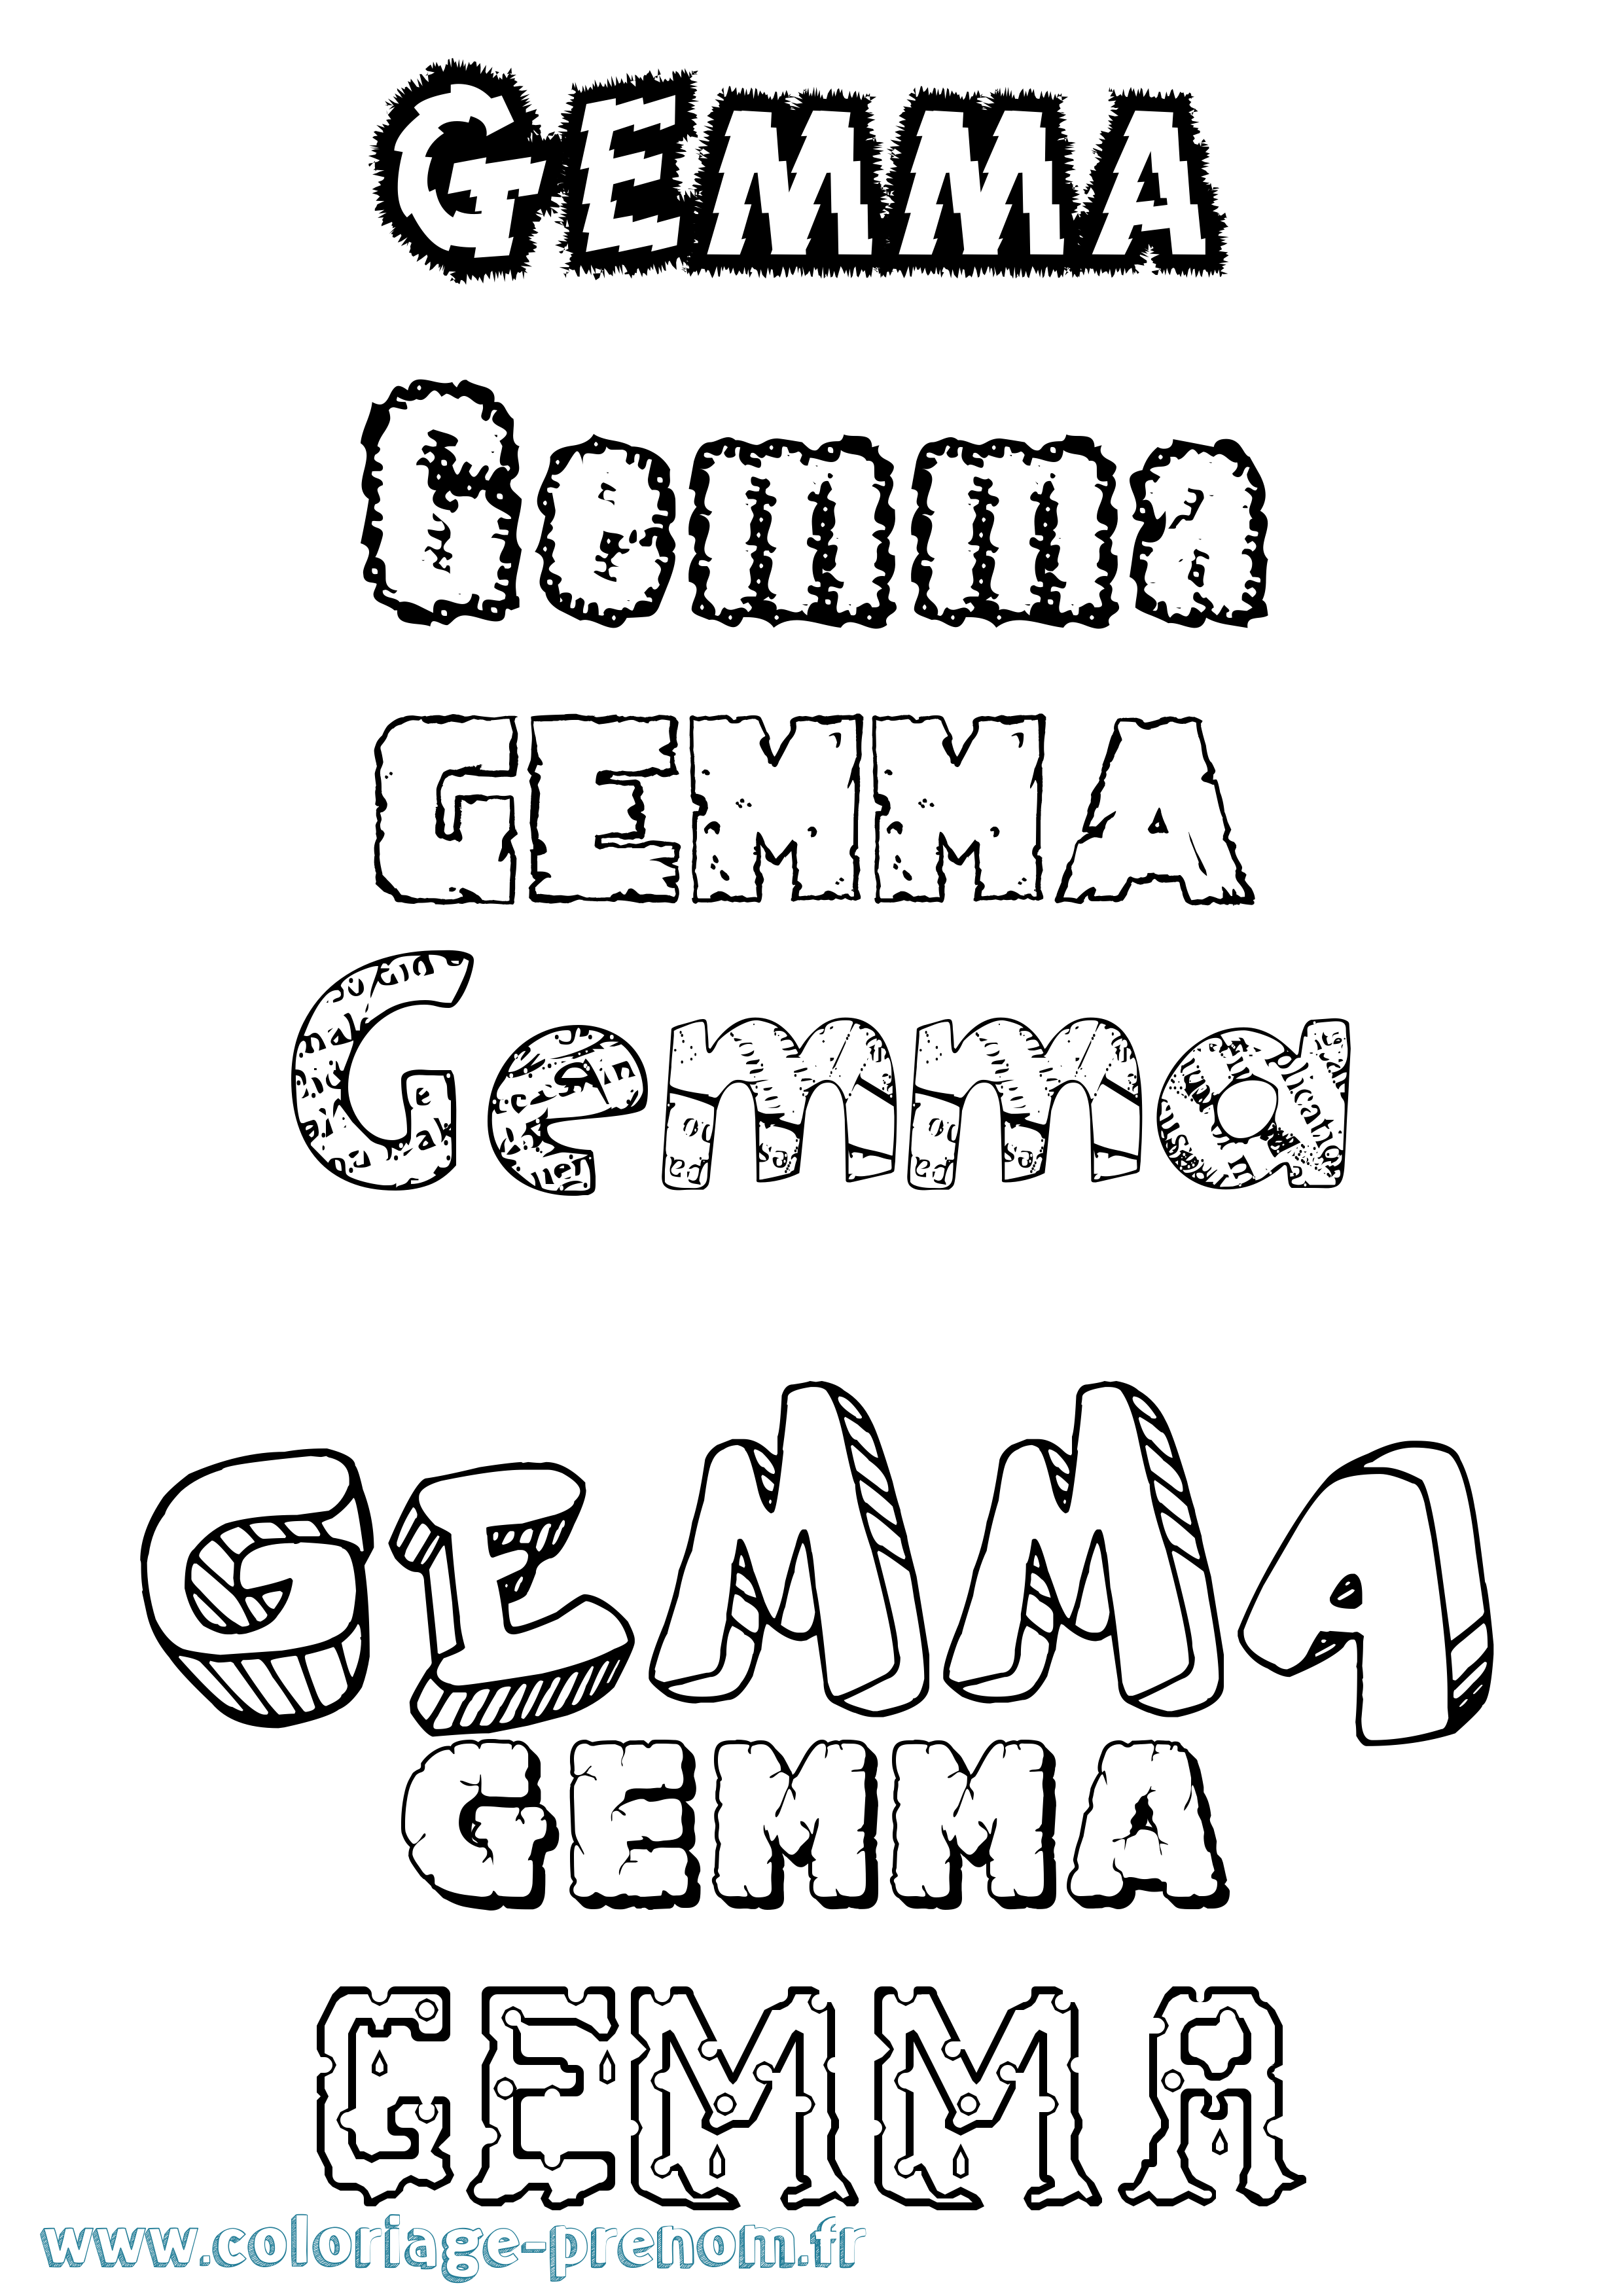 Coloriage prénom Gemma Destructuré